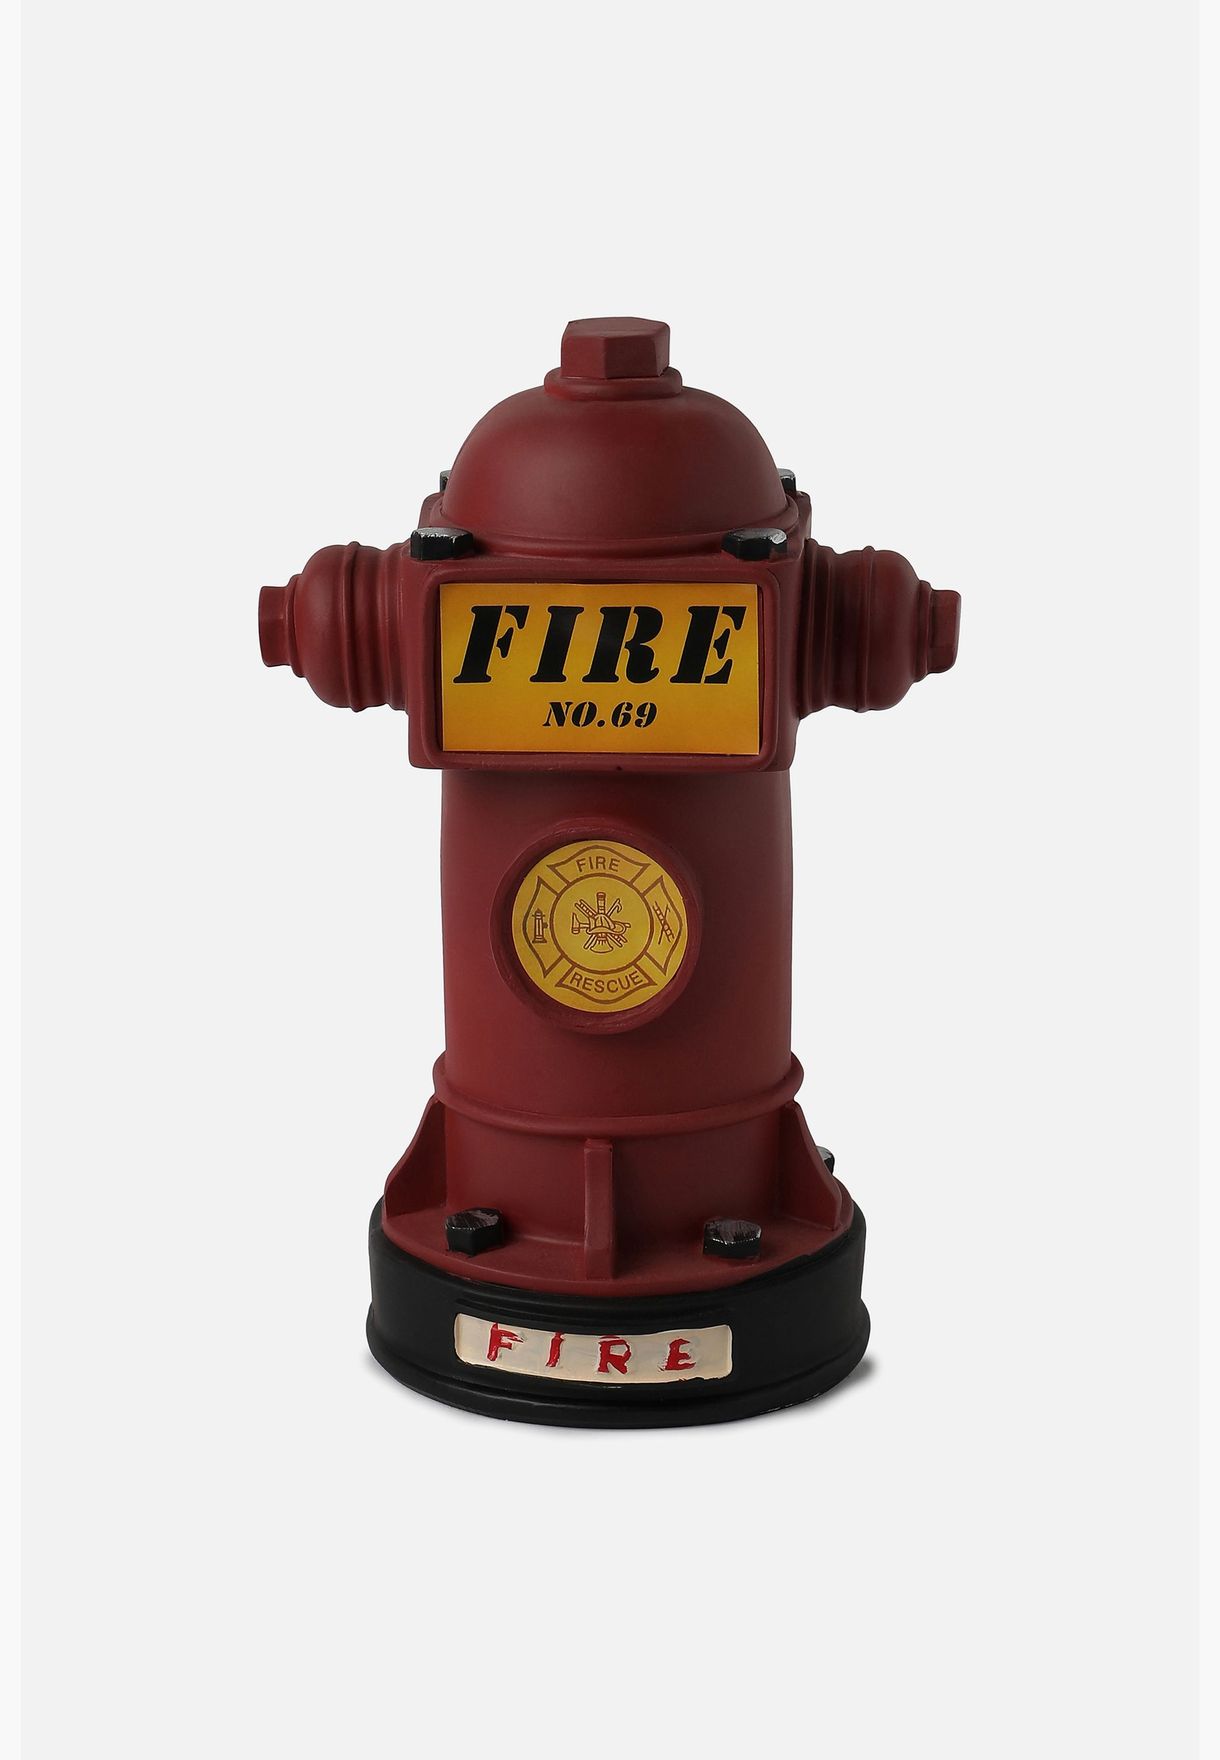 Fire Hydrant Shaped Modern Ceramic Showpiece For Home Decor 